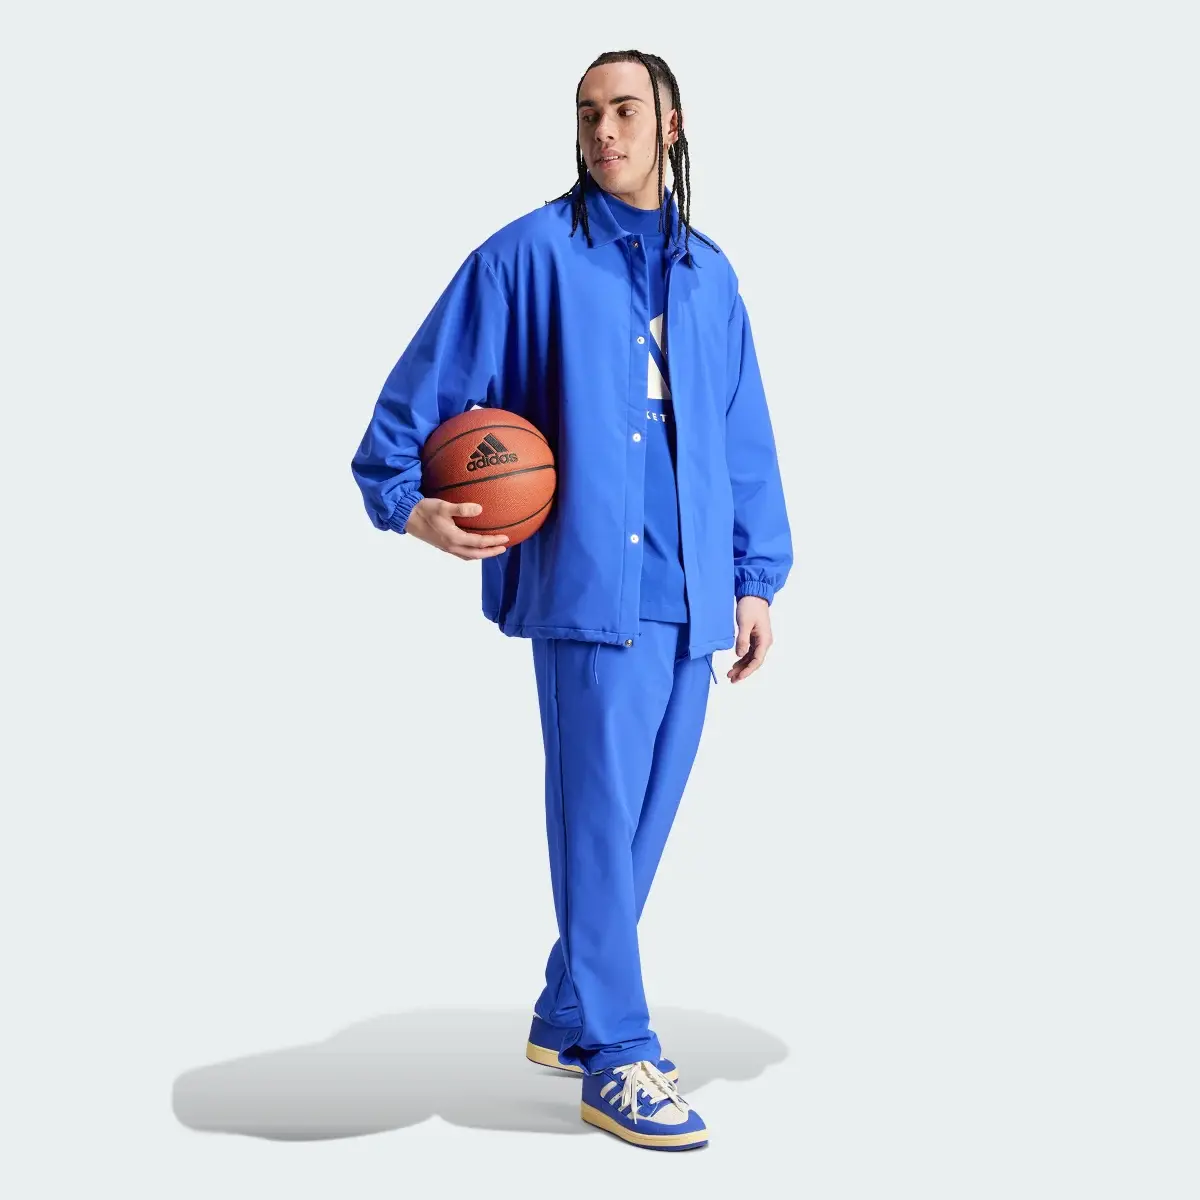 Adidas Coach jacket adidas Basketball. 3